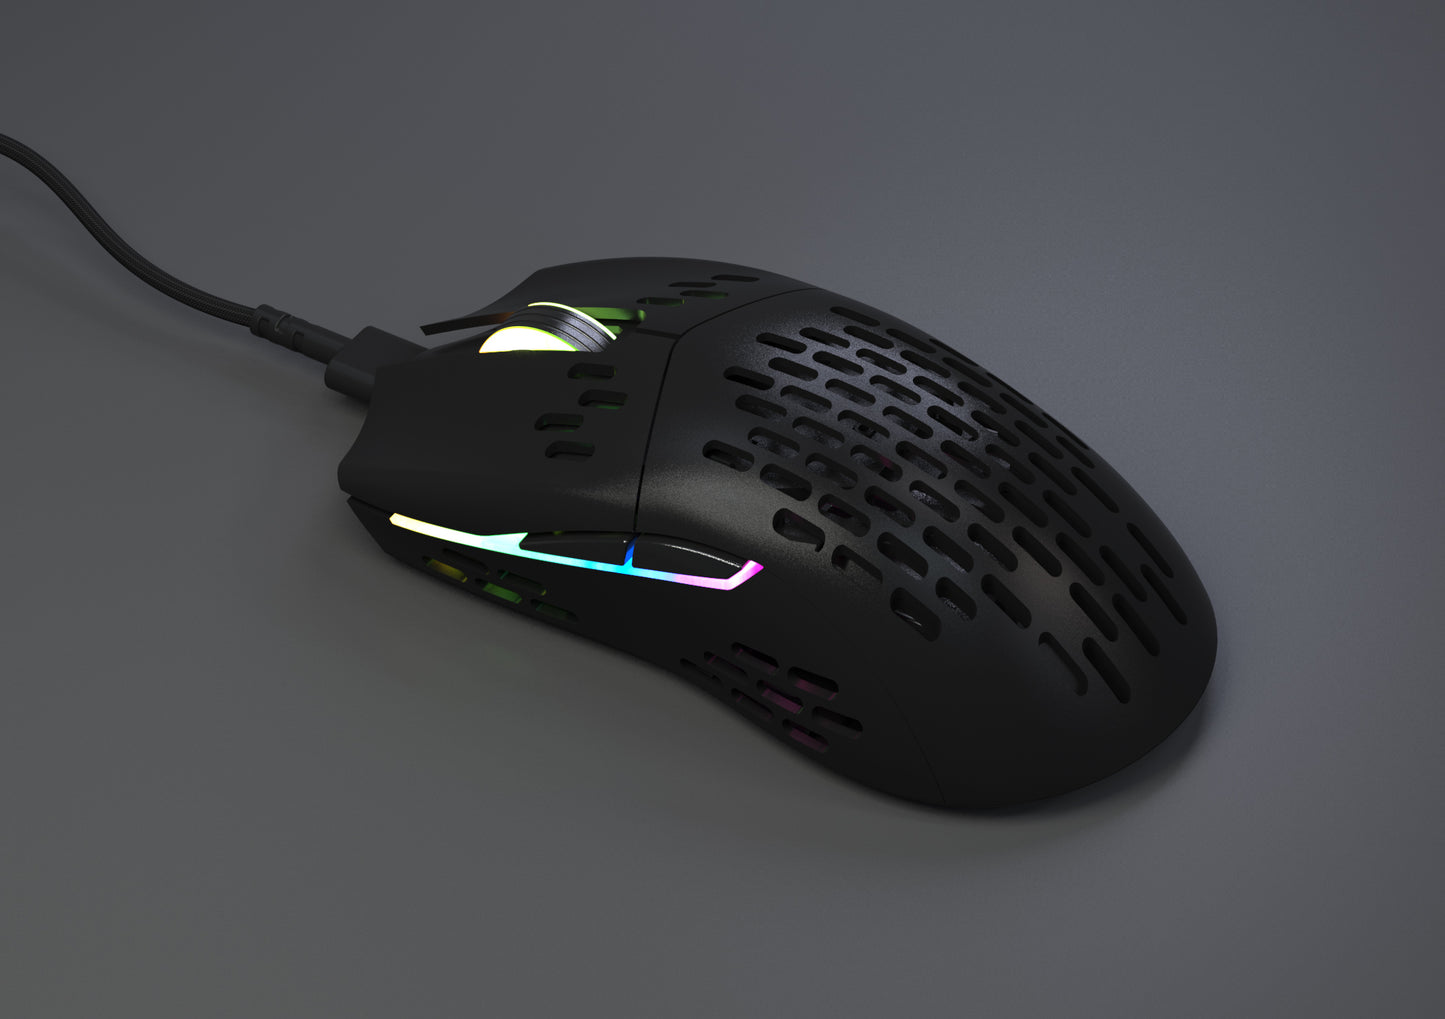 Keychron M1 Wireless Mouse